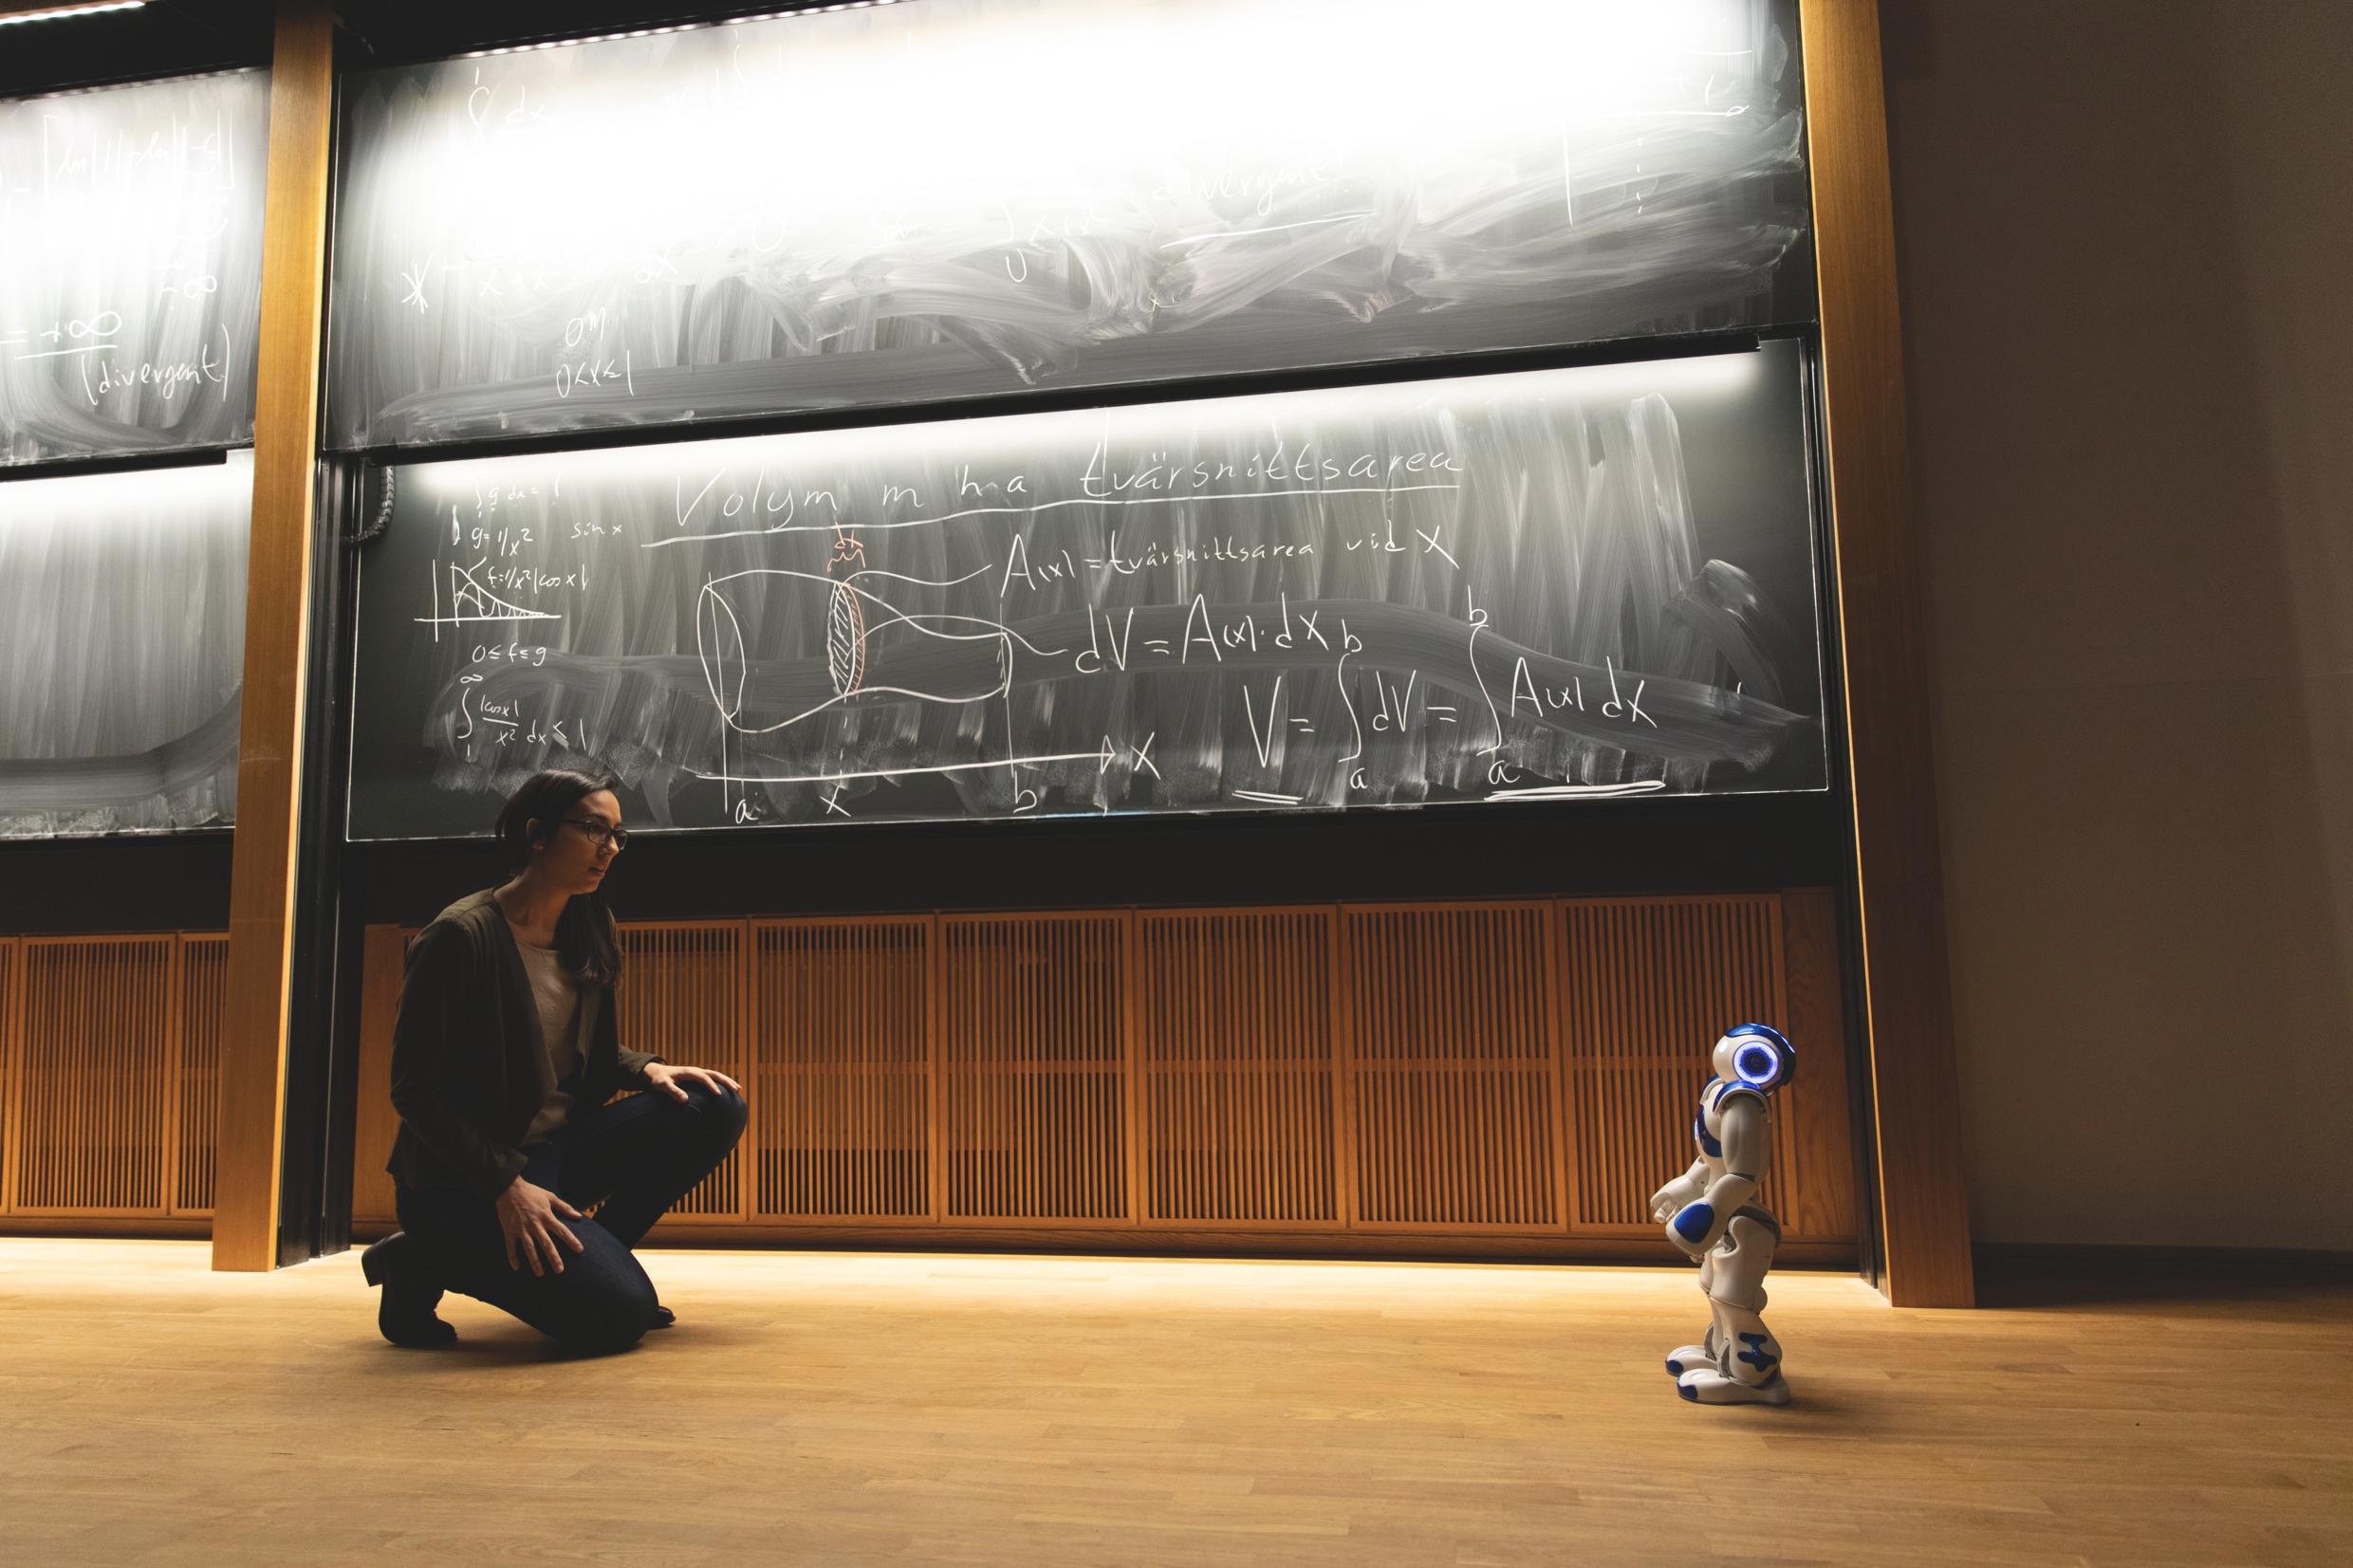 Robot and human interaction.